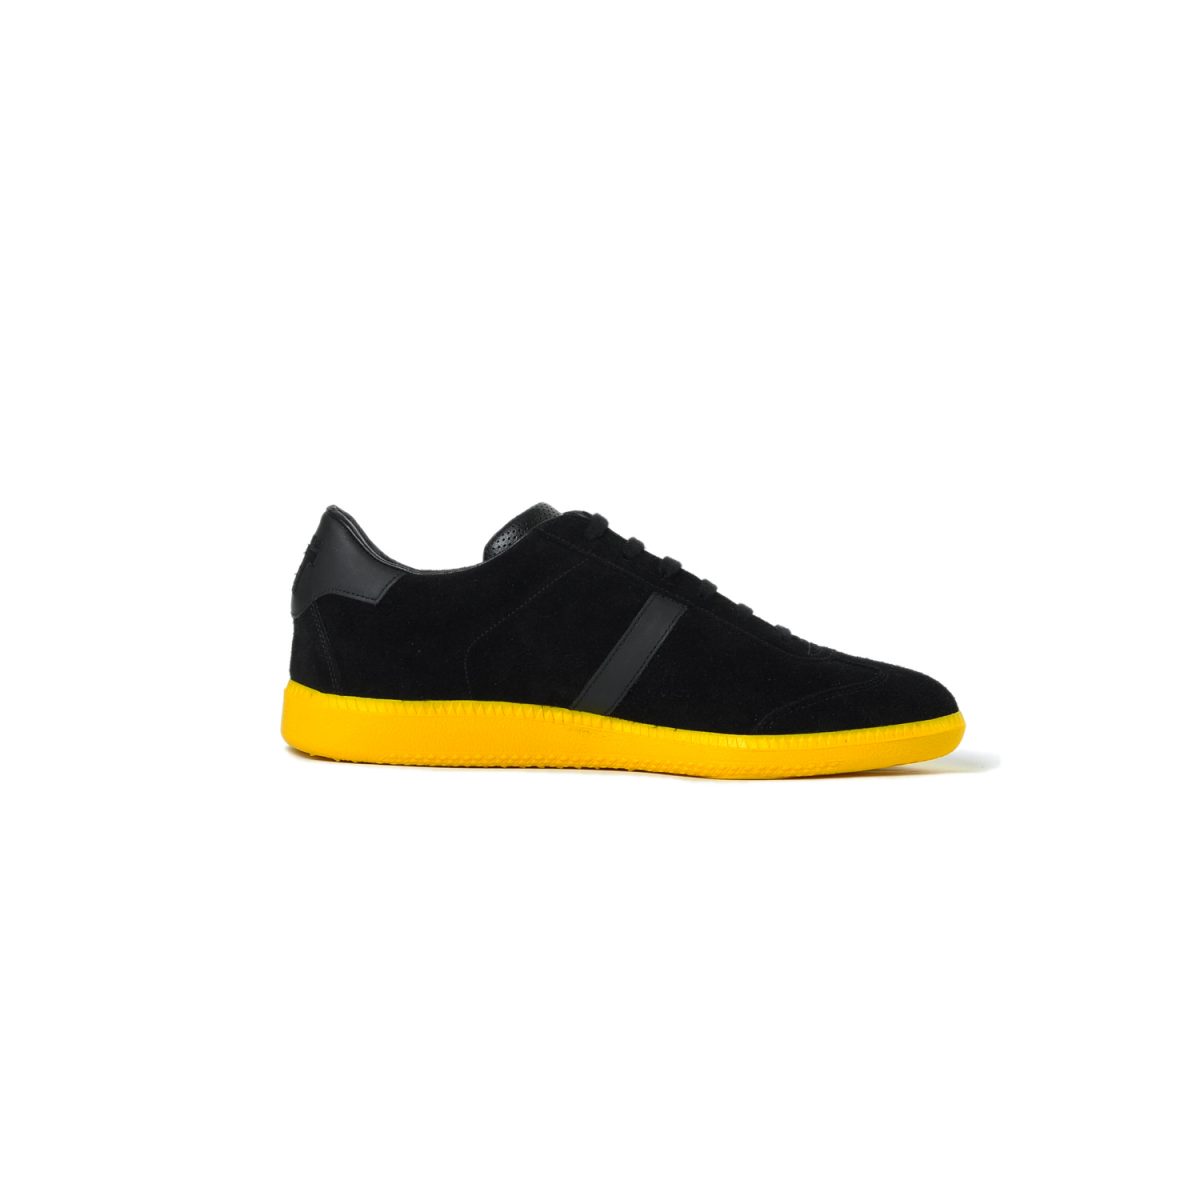 Tisza cipő - Comfort - Fekete-sárga